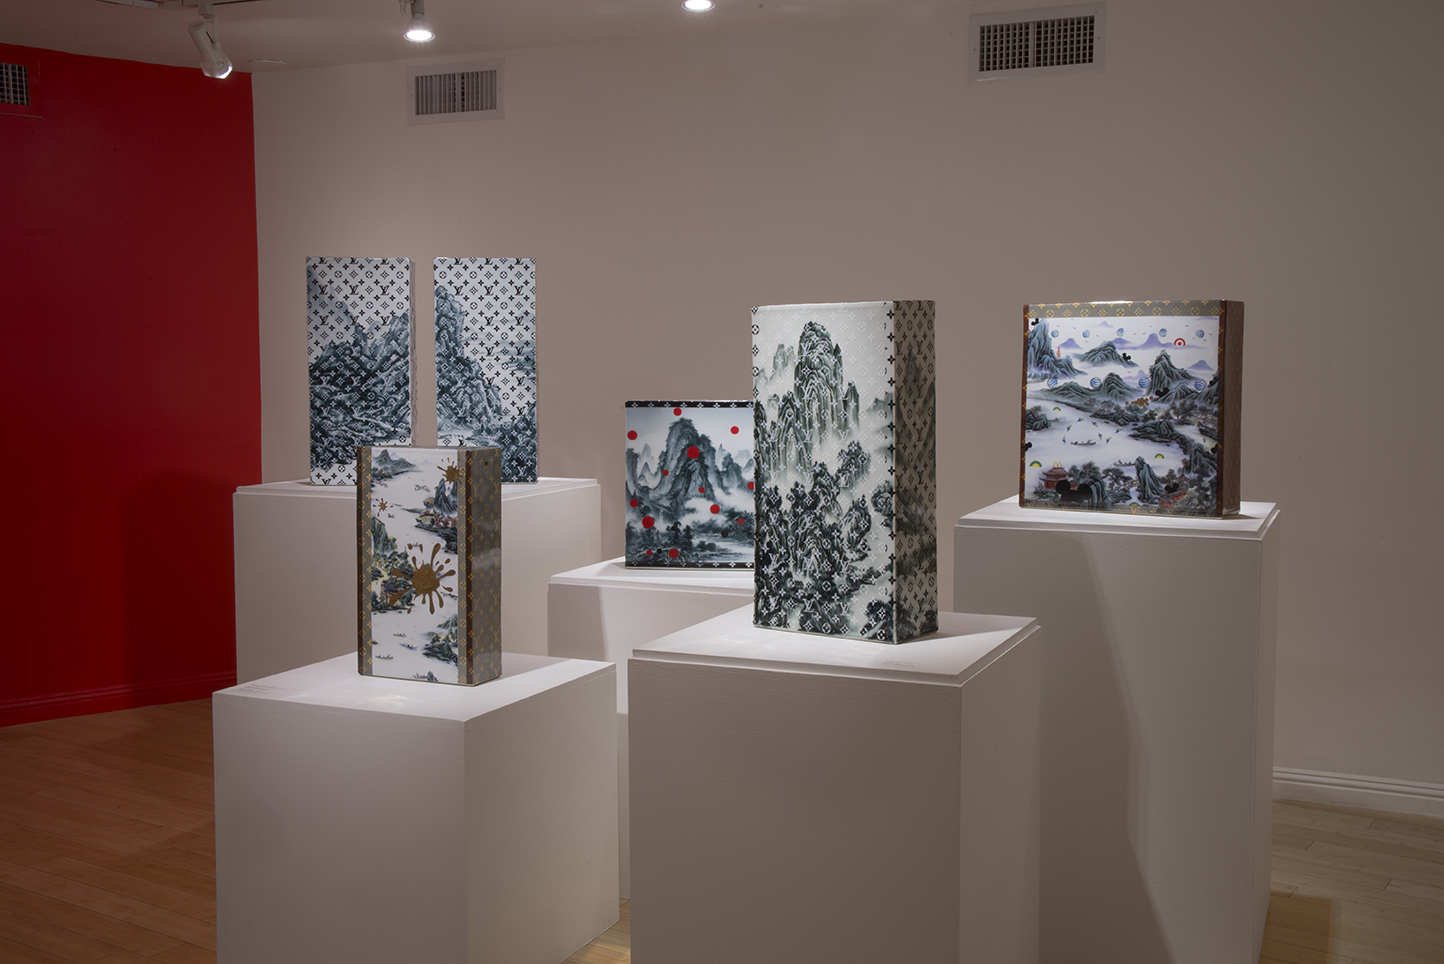 Made in China: New Ceramic Works by Keiko Fukazawa, installation view, 2016.